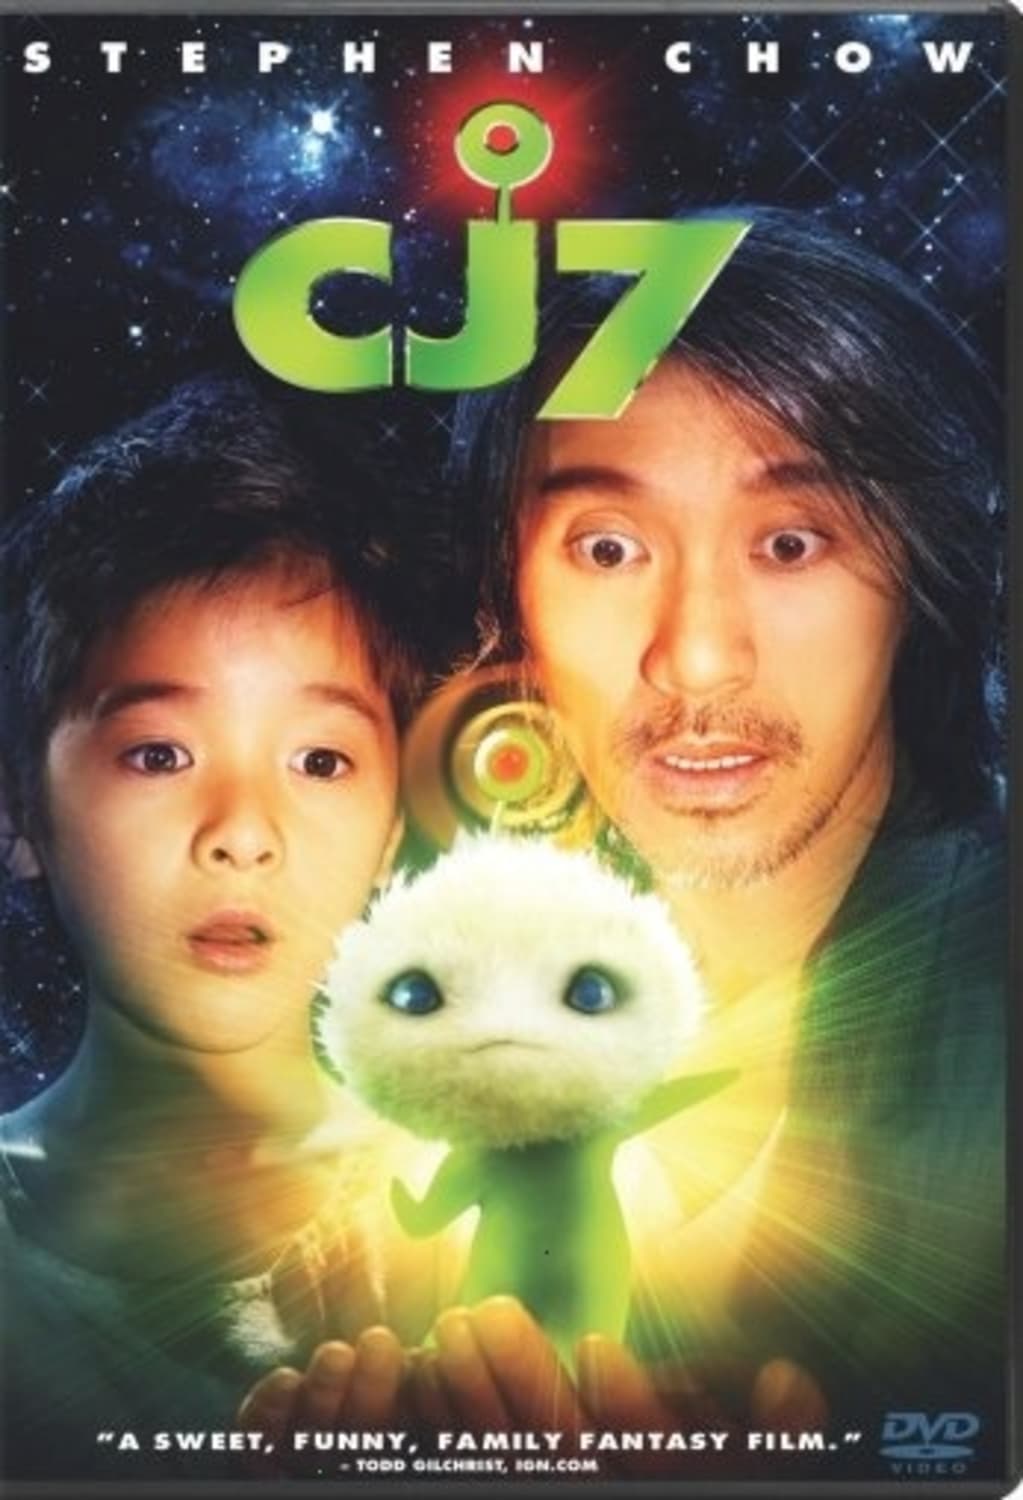 Cj7 (DVD) on MovieShack